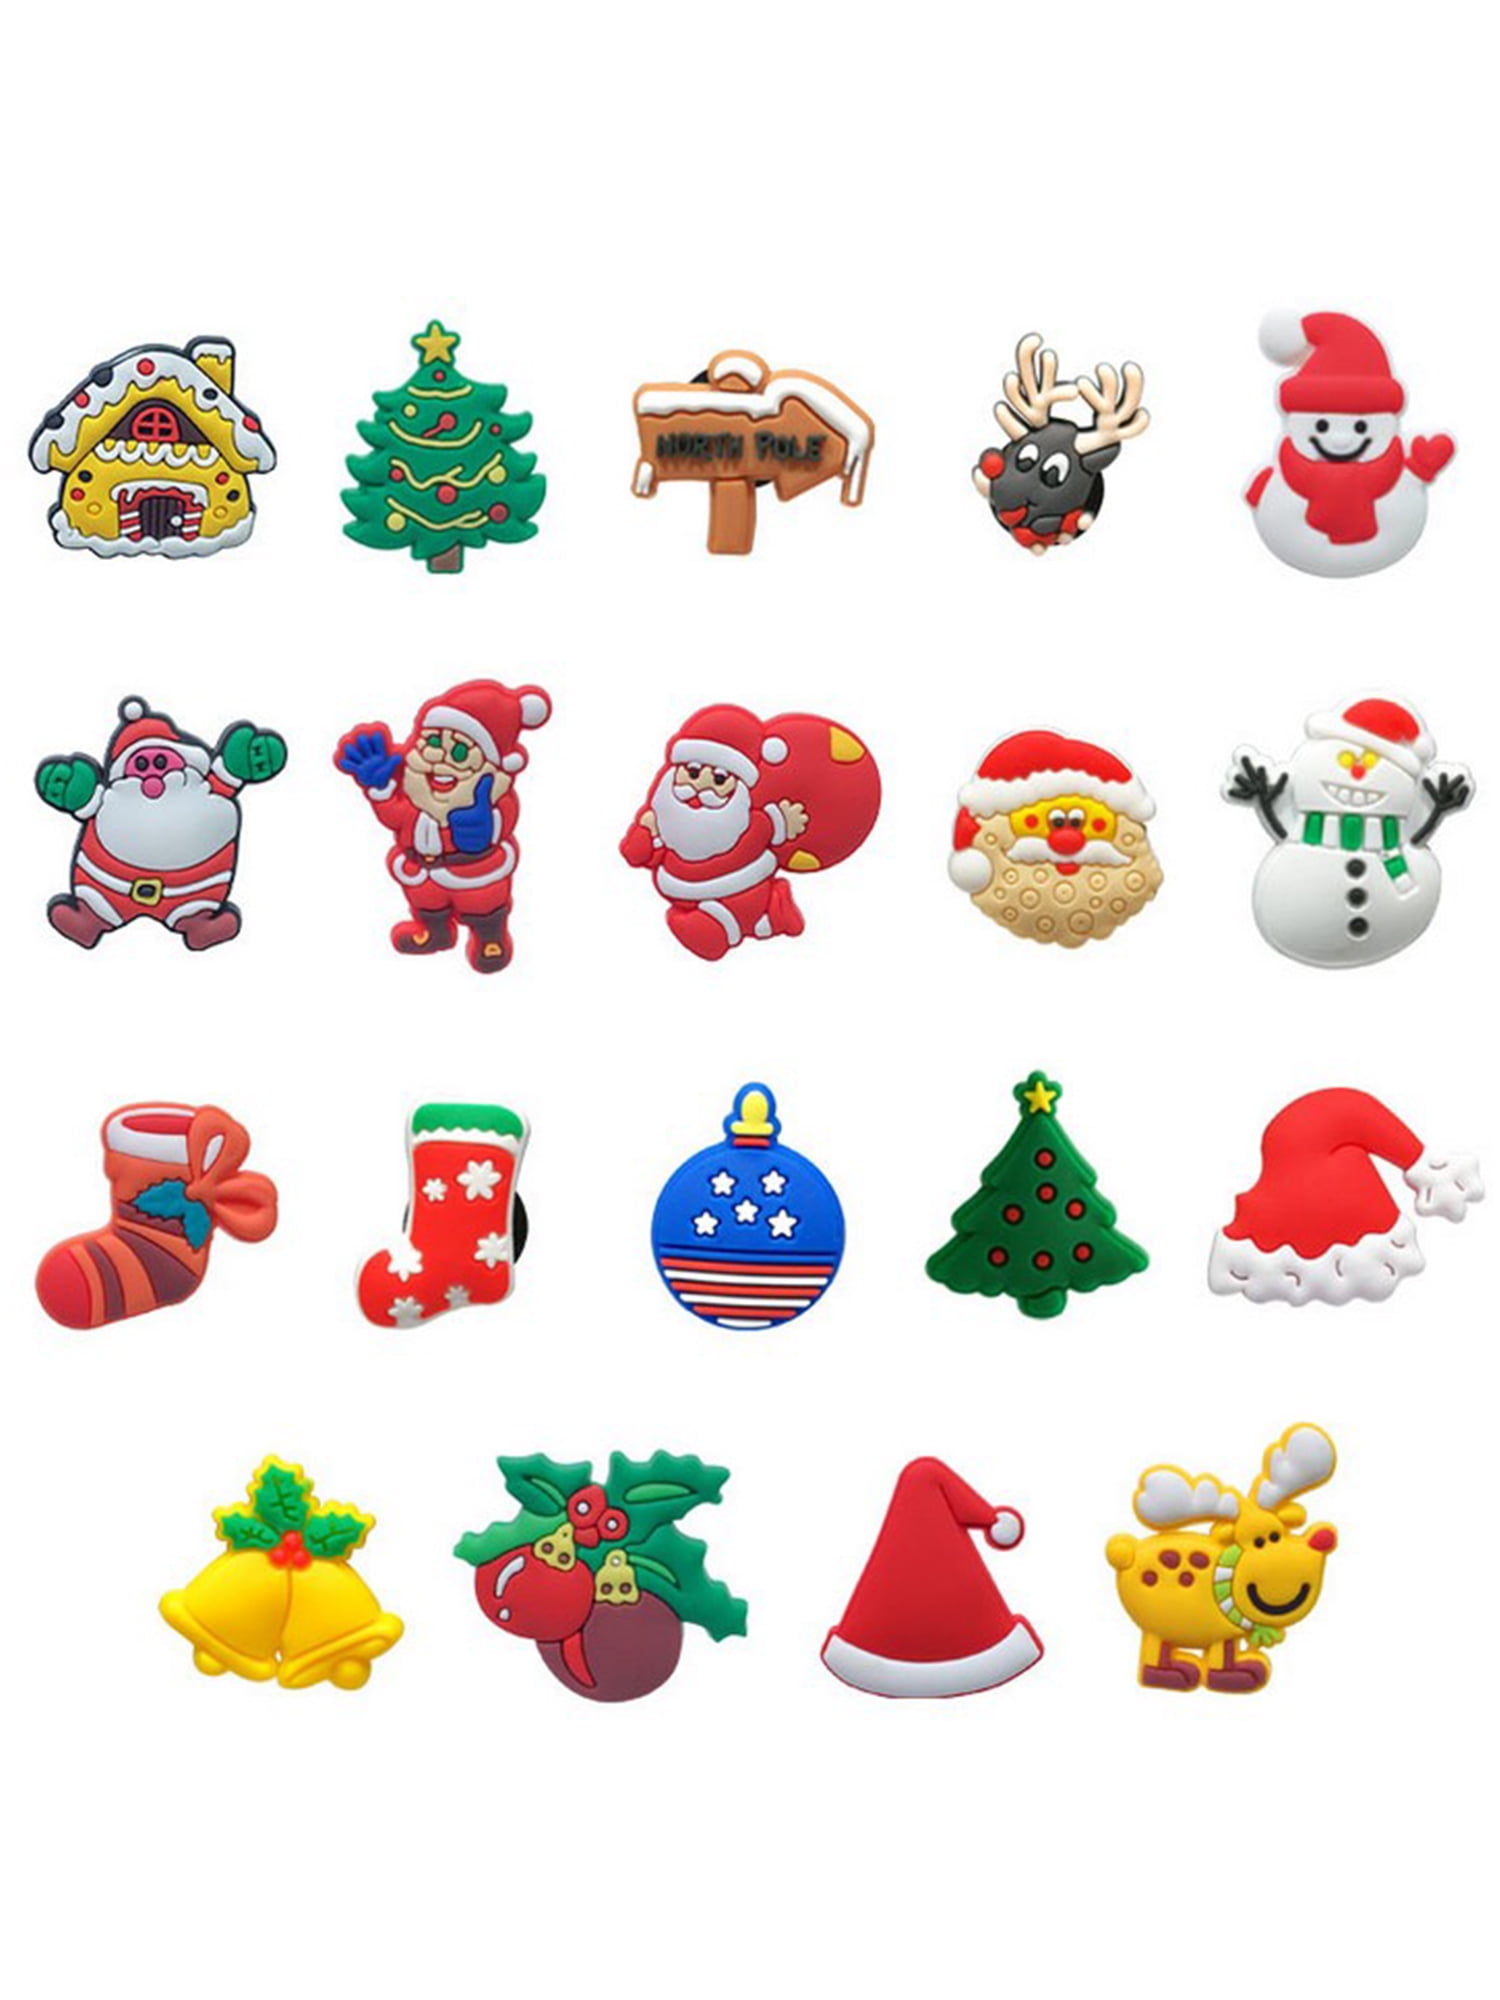 Kids Gifts 50pcs Emoji Expression Soft PVC Shoe Charms Fit Clog/Bracelets 